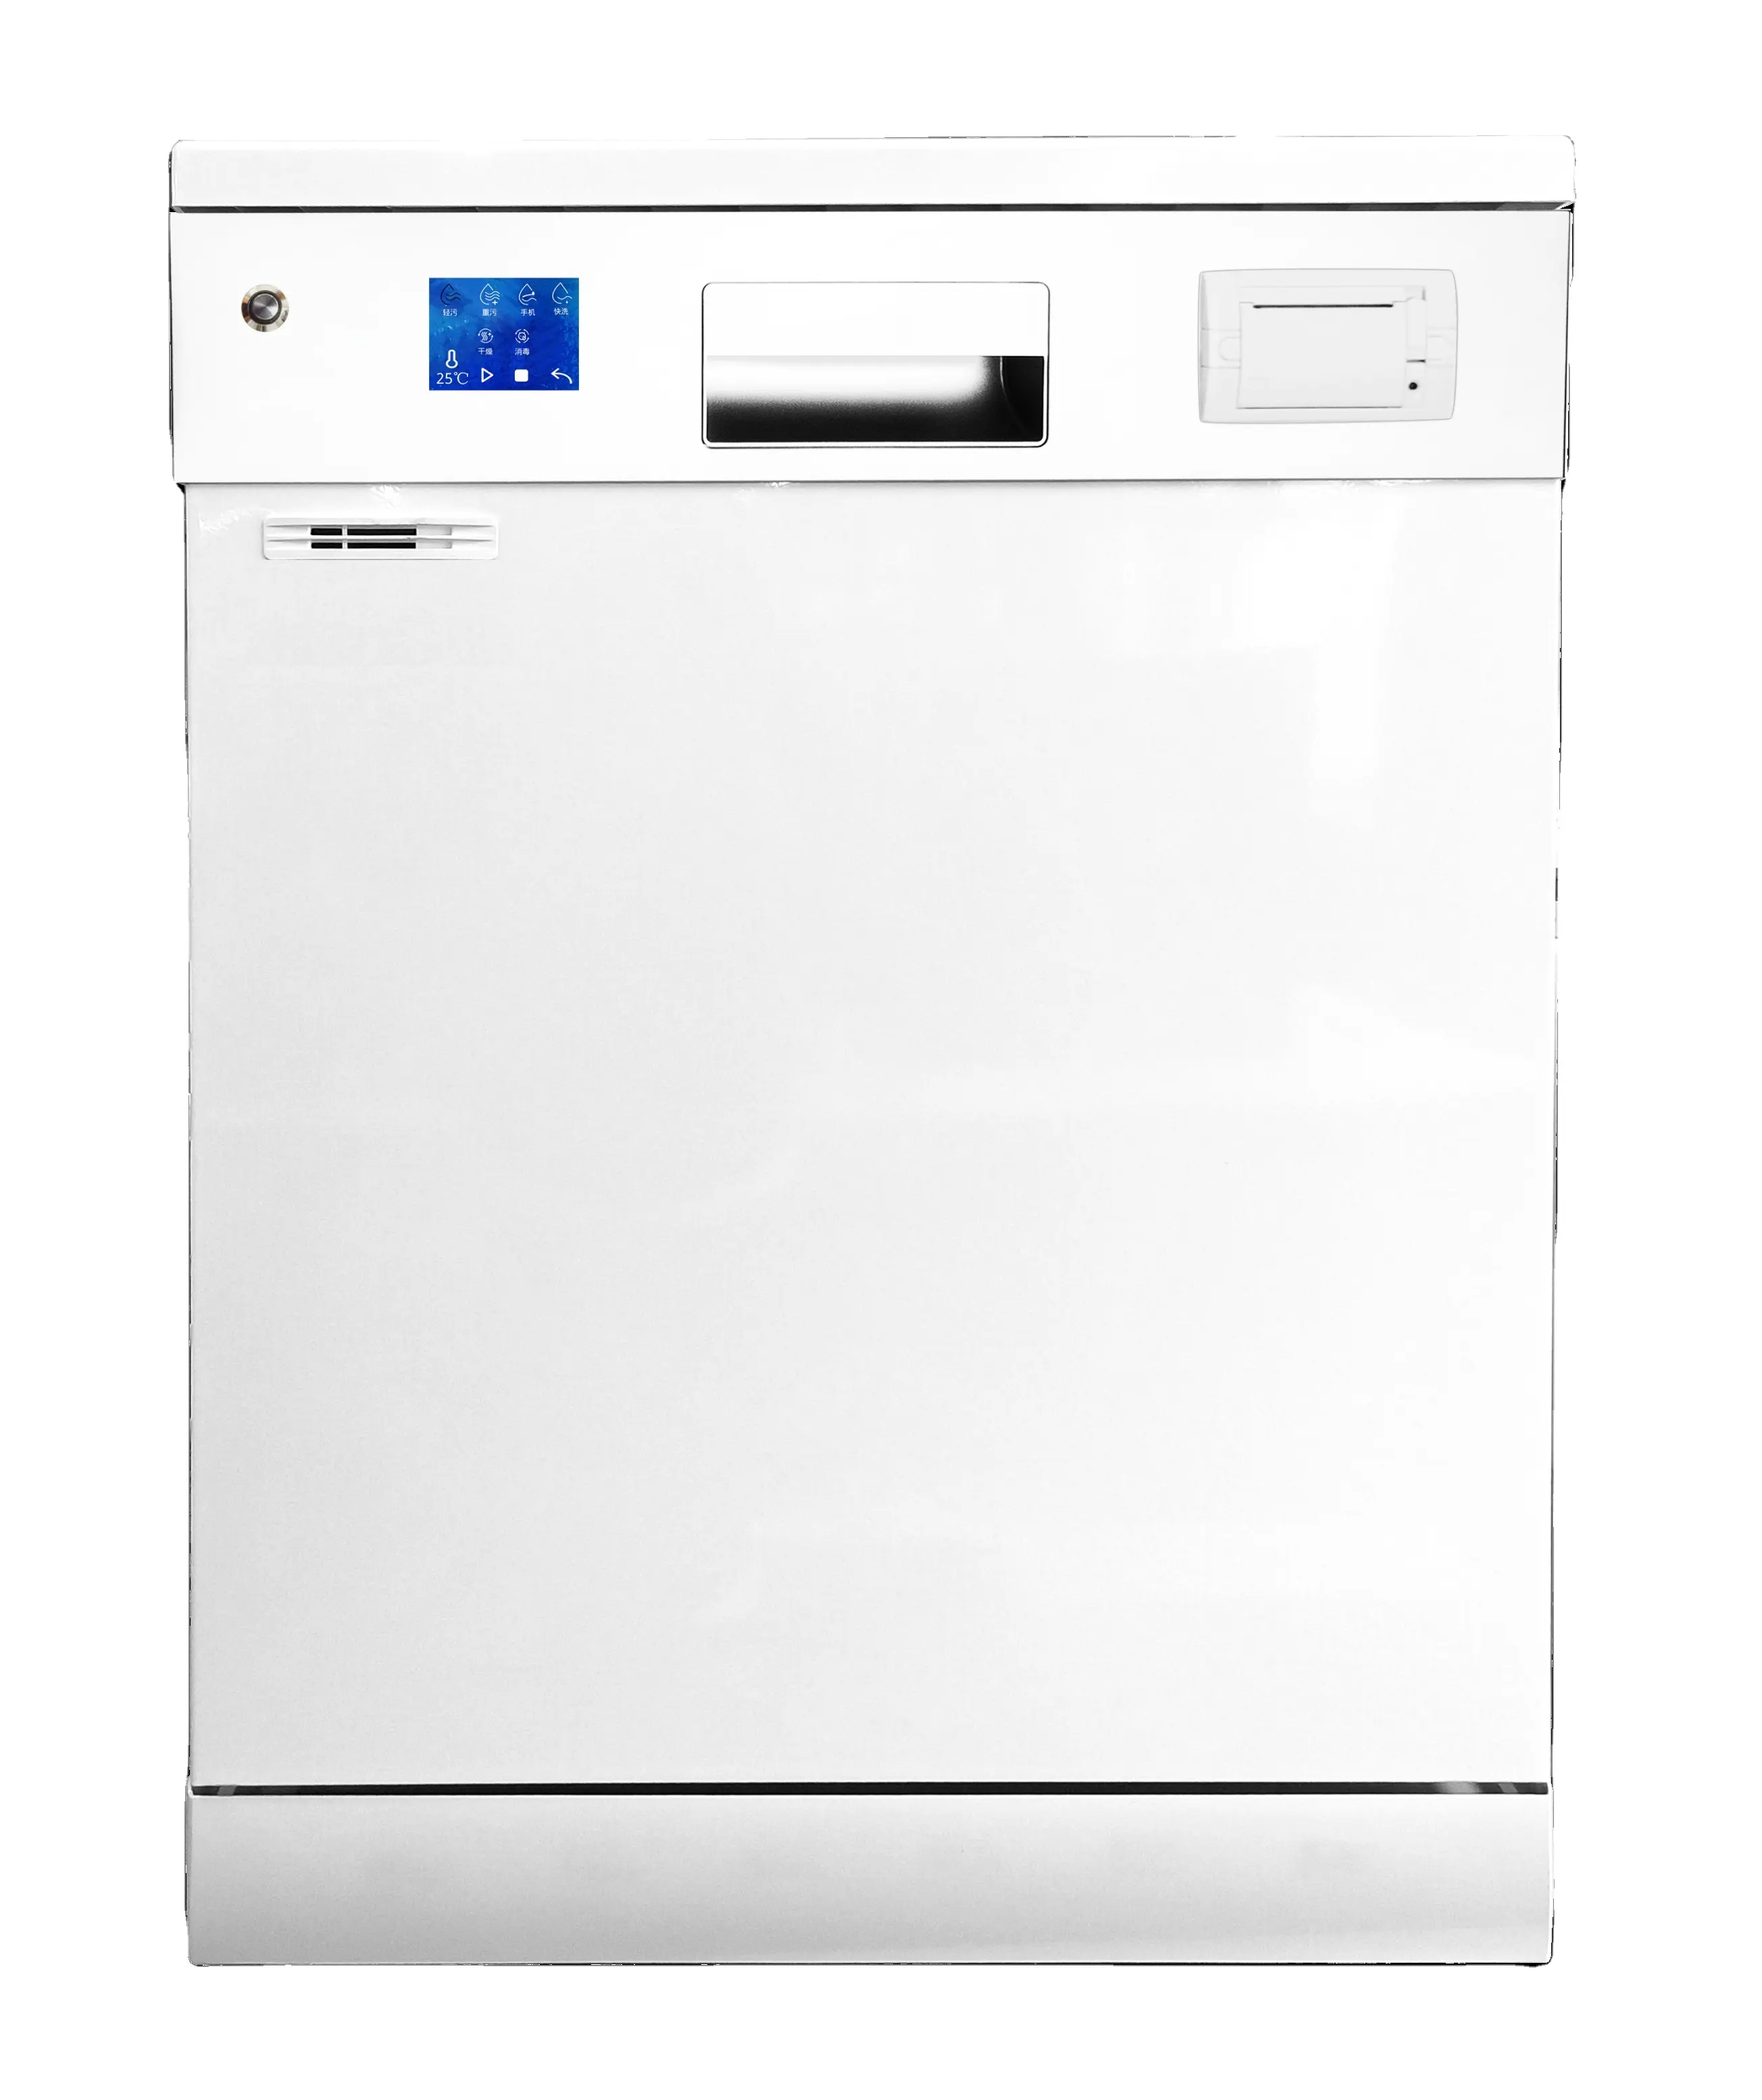 Bioconstar lavadora de vidro, lavadora de laboratório desinfector 65l lavagem LWD-65LW